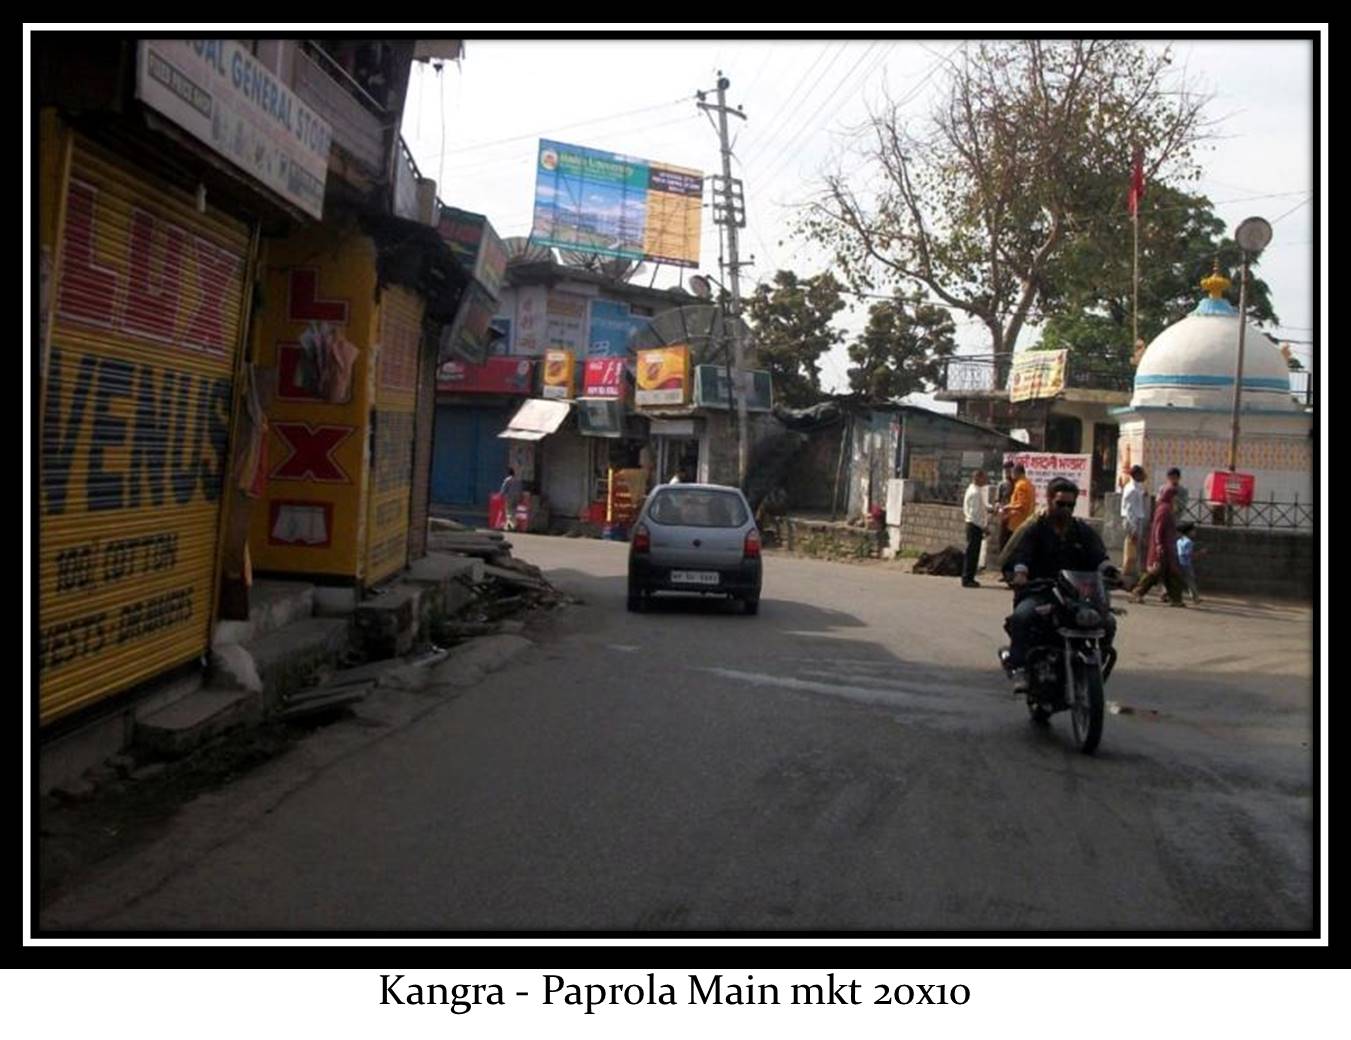 Paprola Main market, Kangra